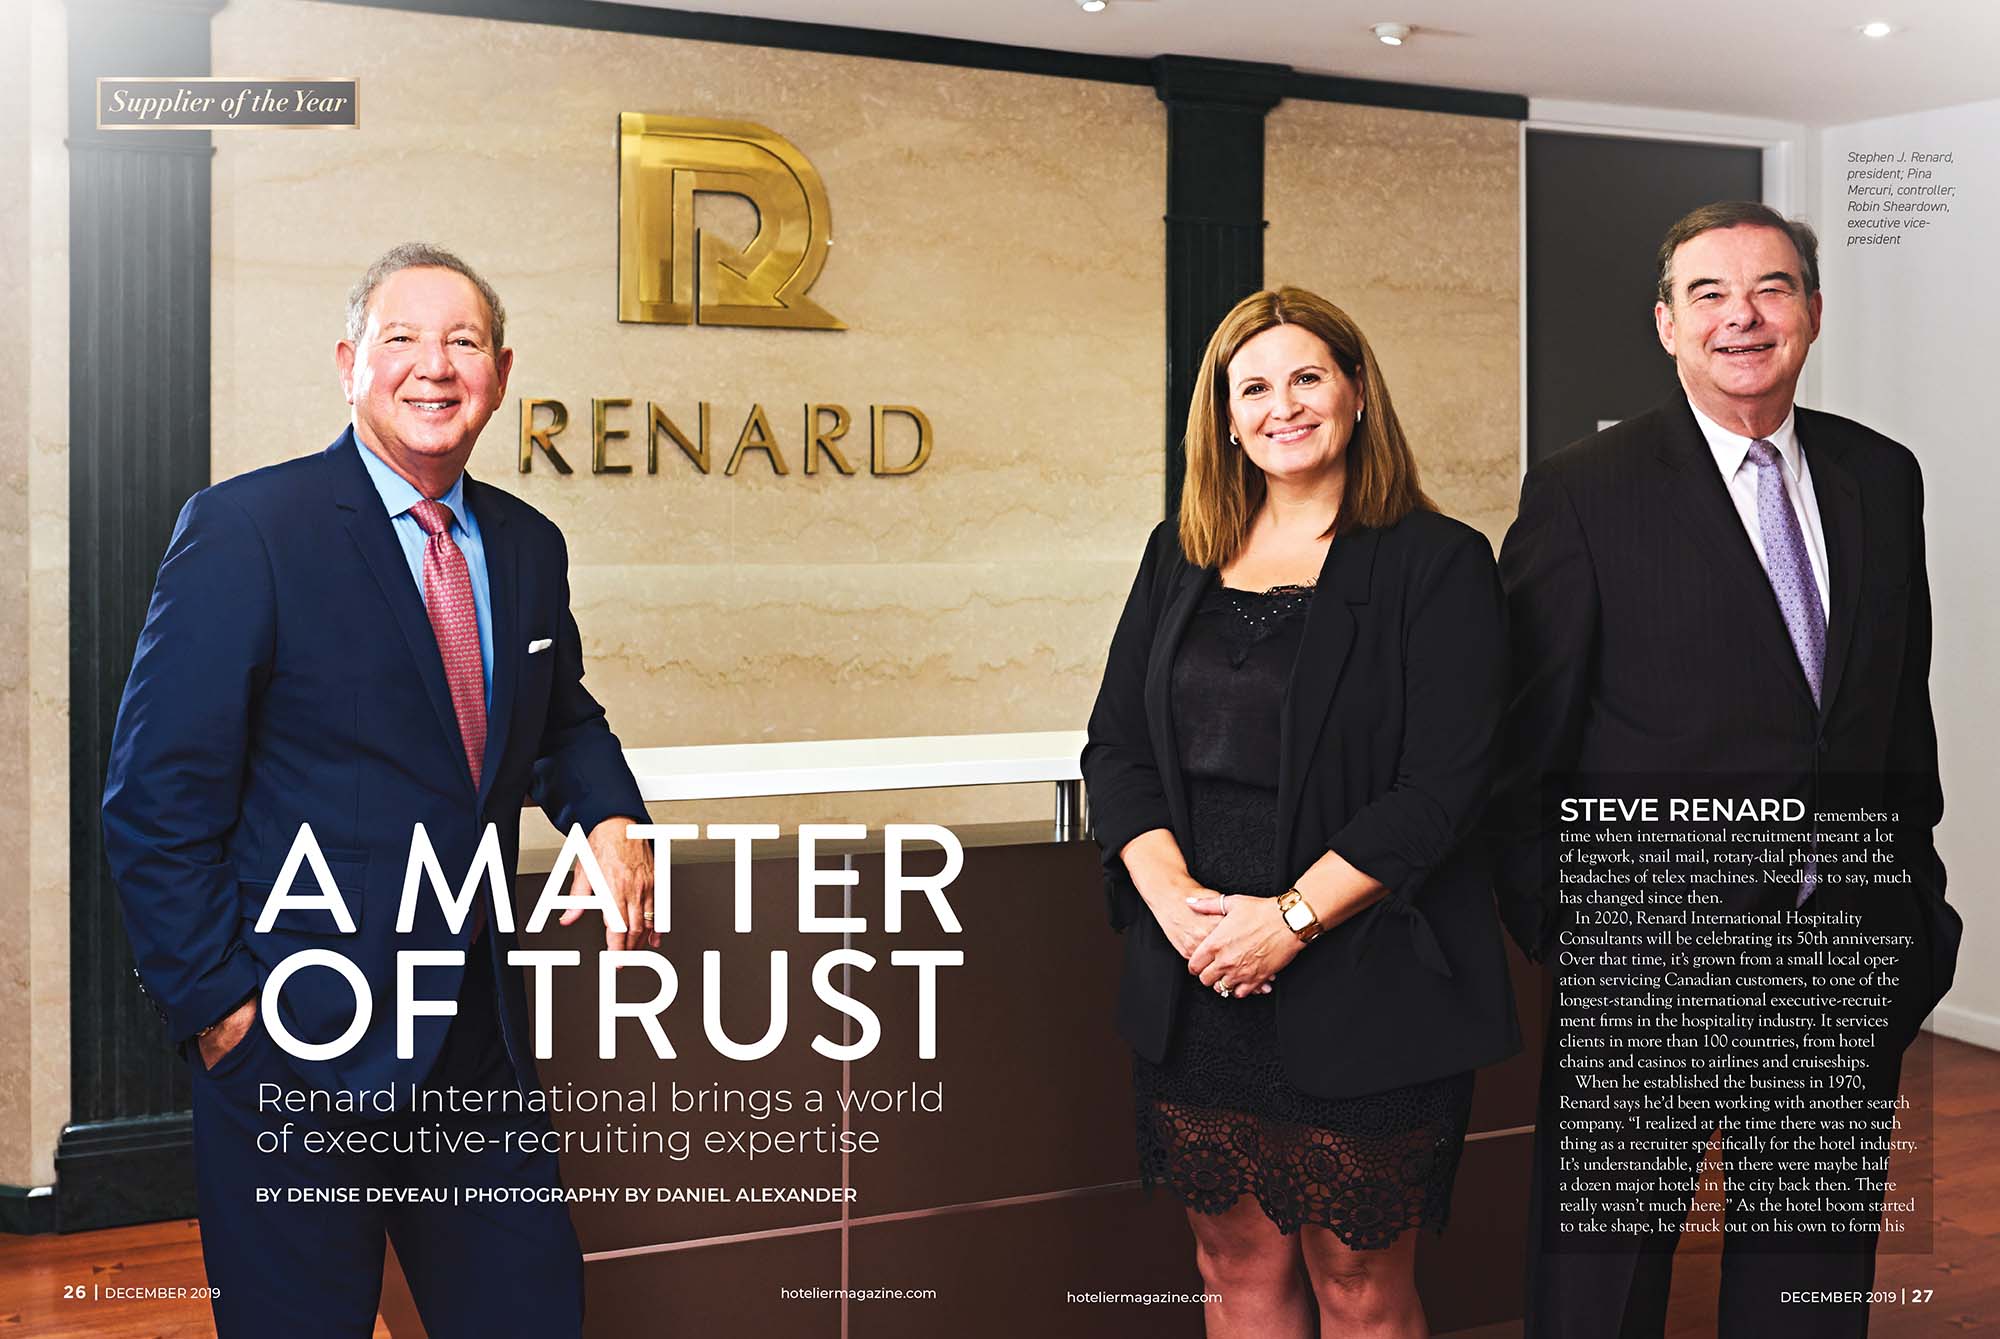 Editorial portrait of three Renard corporate executives